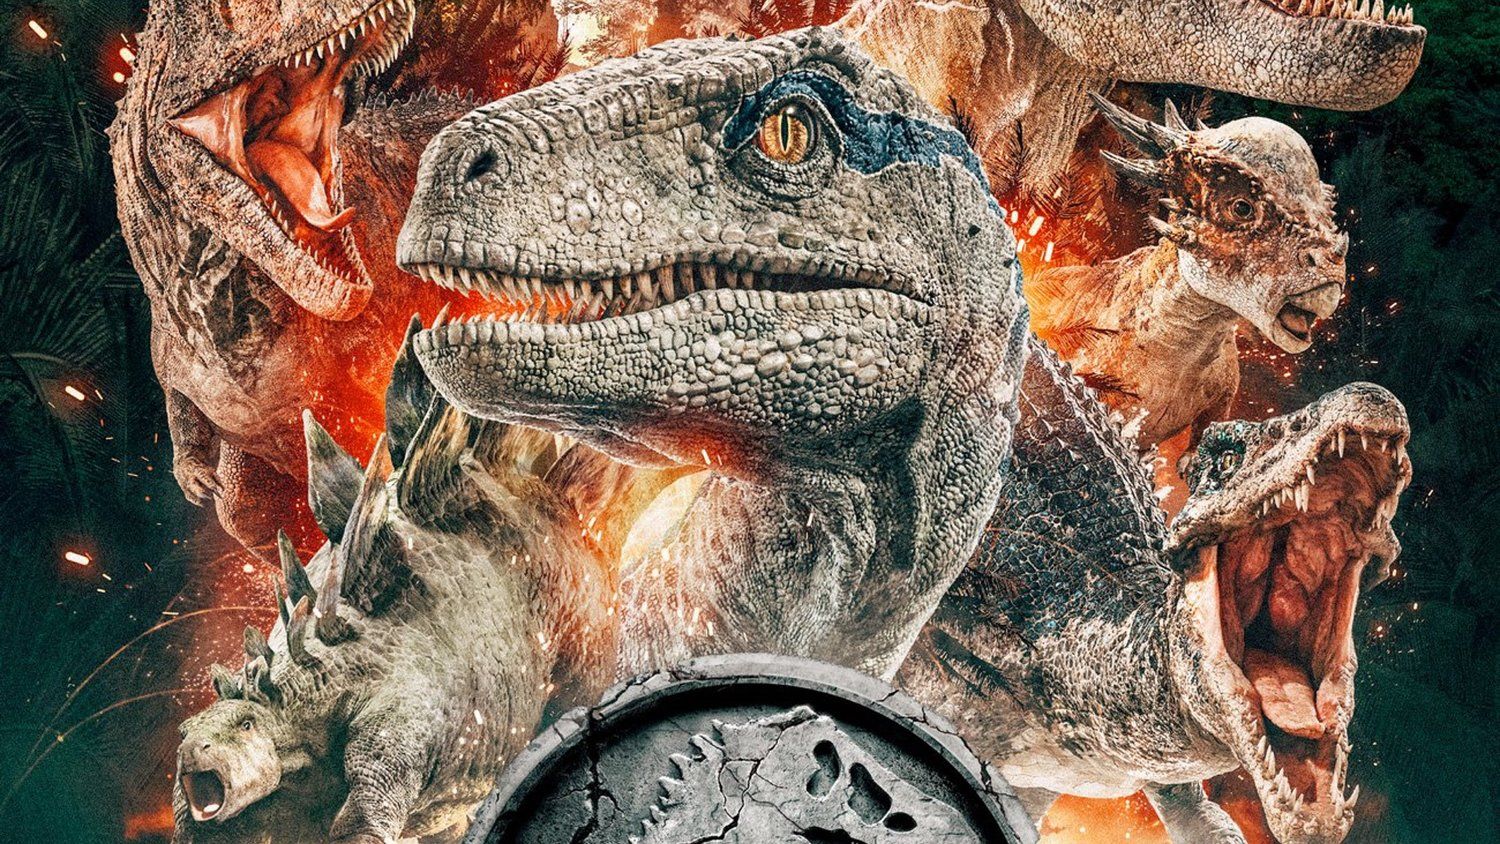 The Dinosaur Cast of JURASSIC WORLD: FALLEN KINGDOM is Featured